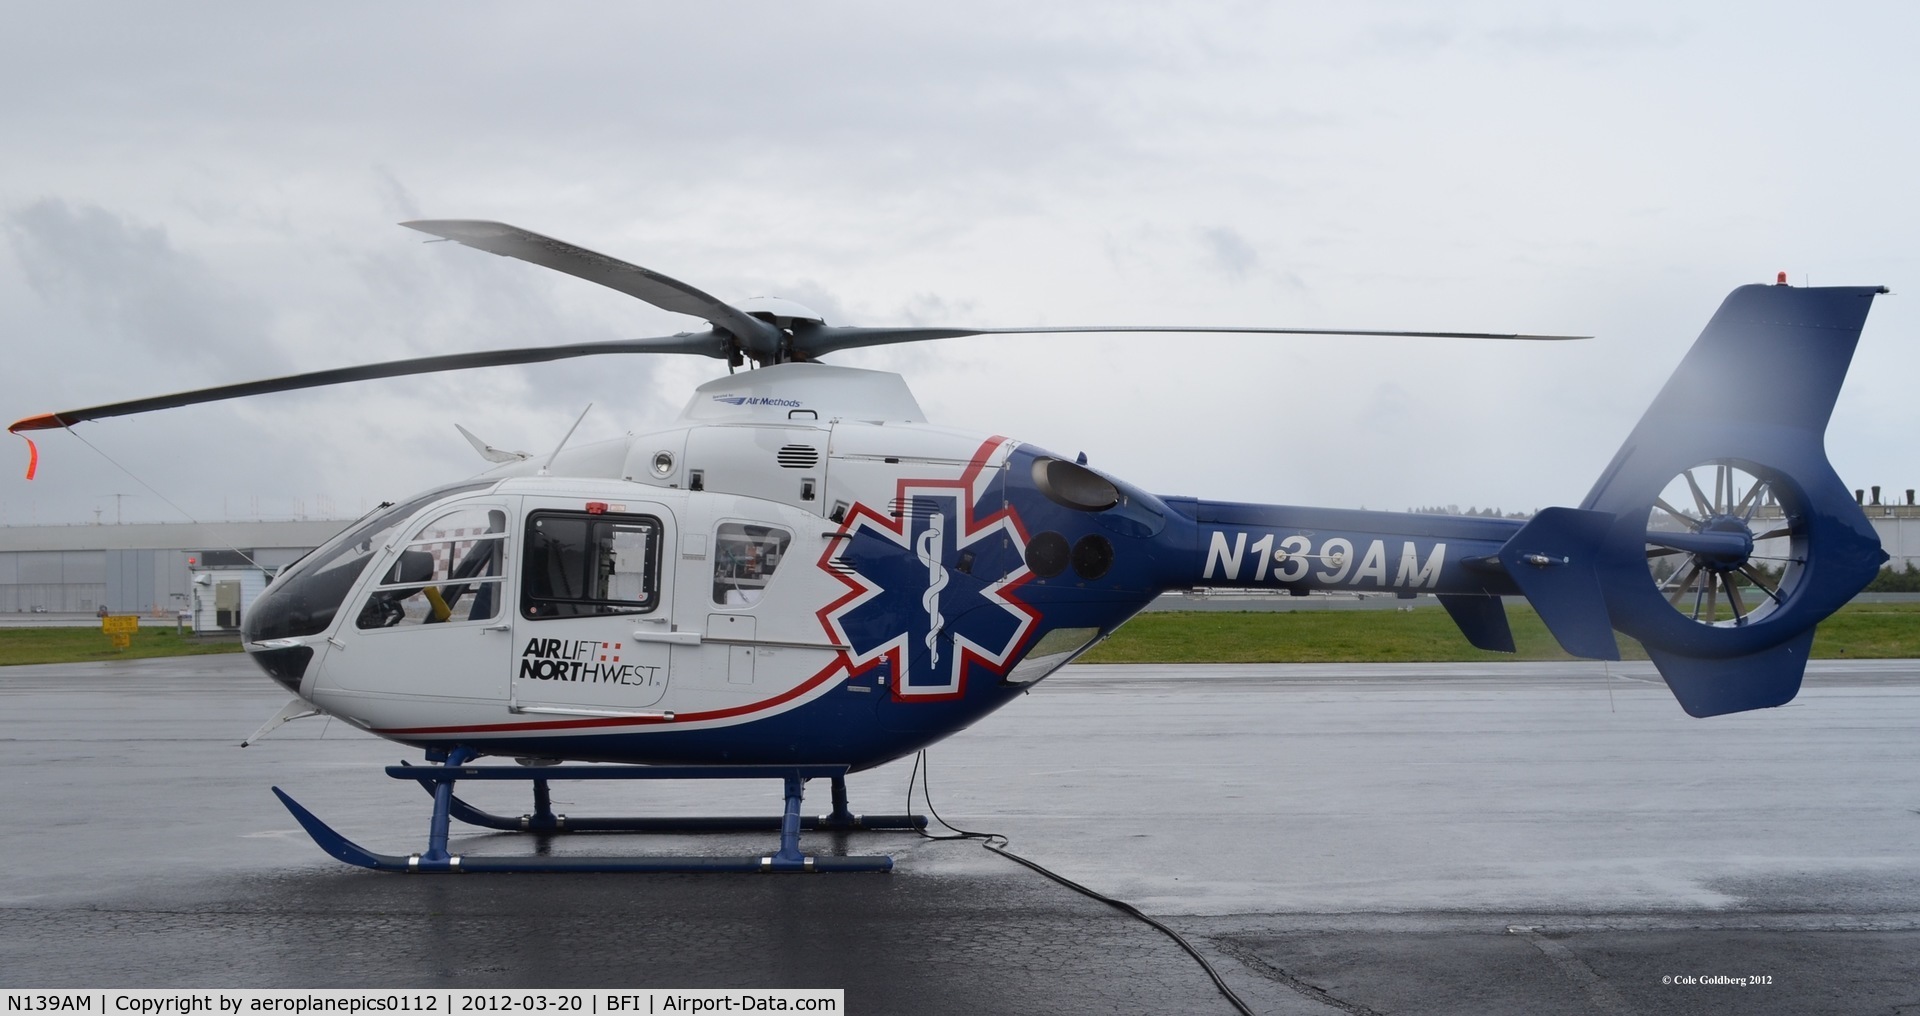 N139AM, 2008 Eurocopter EC-135T-2+ C/N 0655, N139AM seen at KBFI, in the rain.